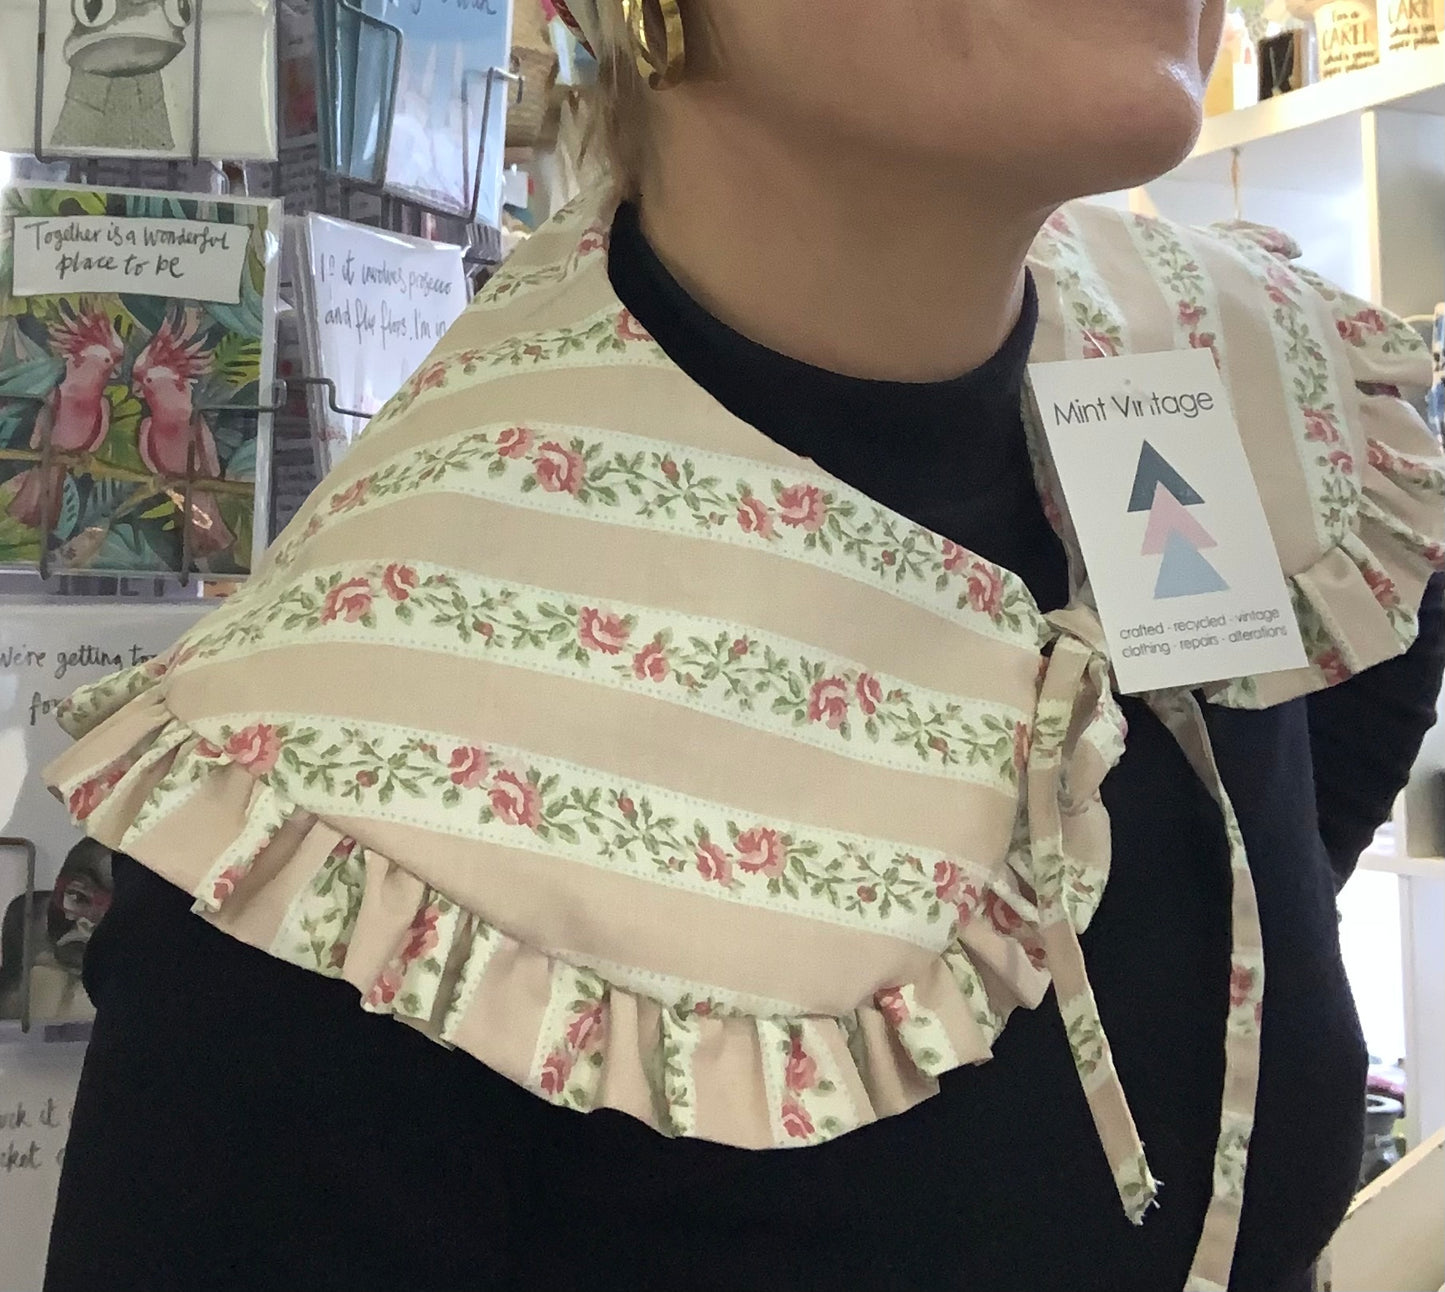 Handmade statement collar using vintage textiles